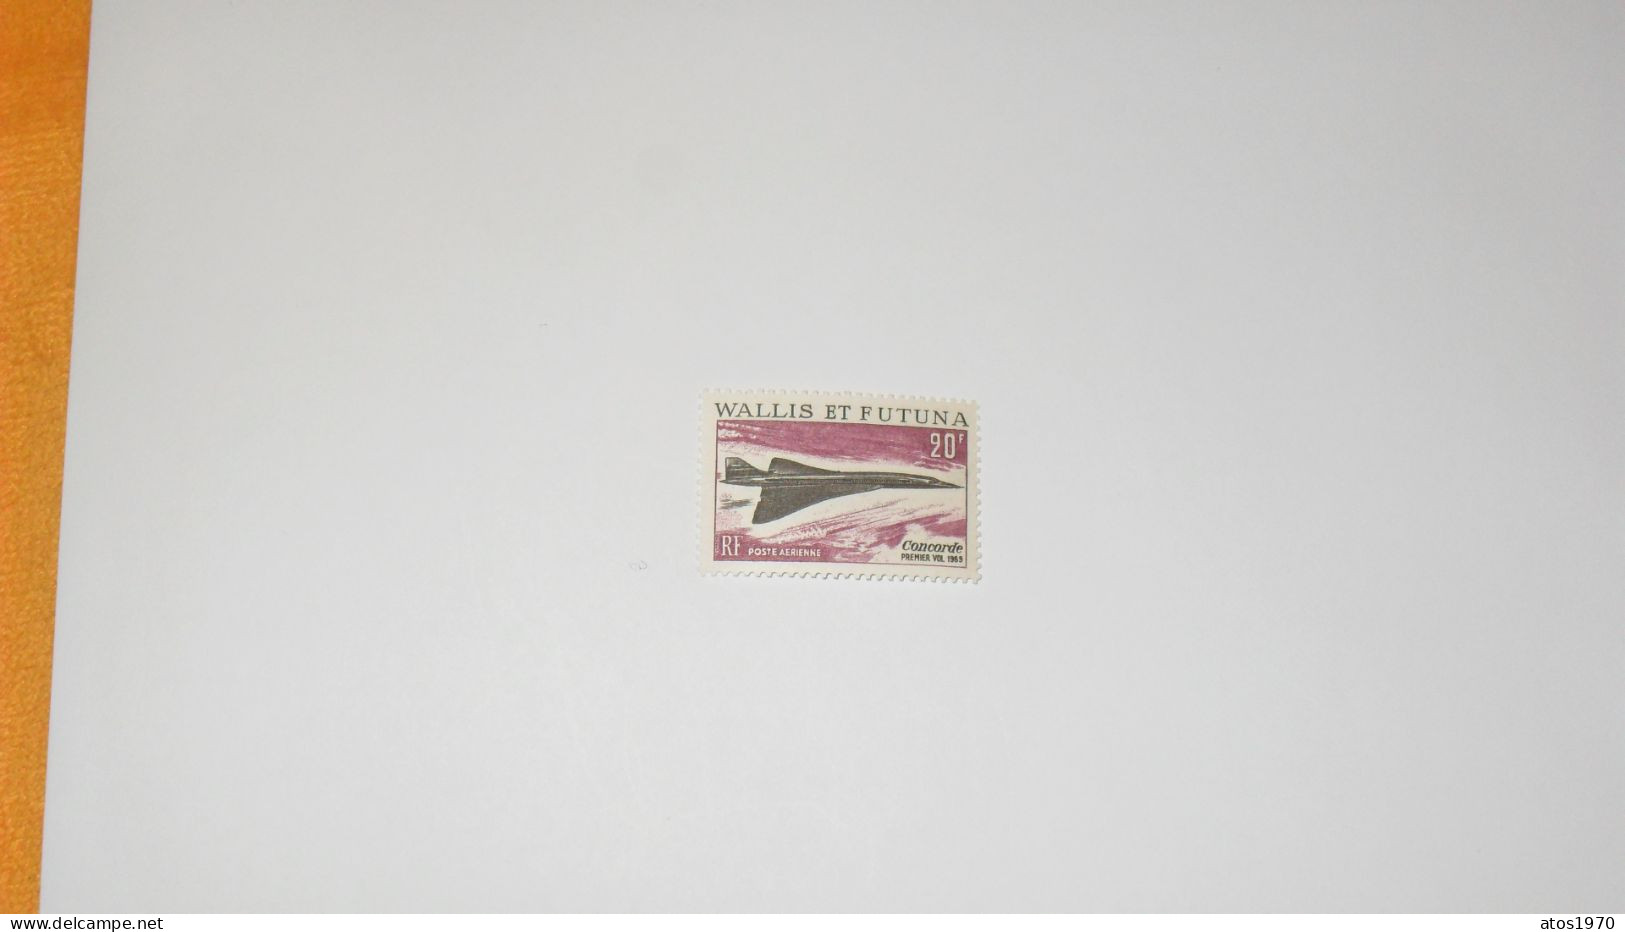 TIMBRE ANCIEN NEUF CONCORDE PREMIER VOL 1969 20 F WALLIS ET FUTUNA.. - Unused Stamps